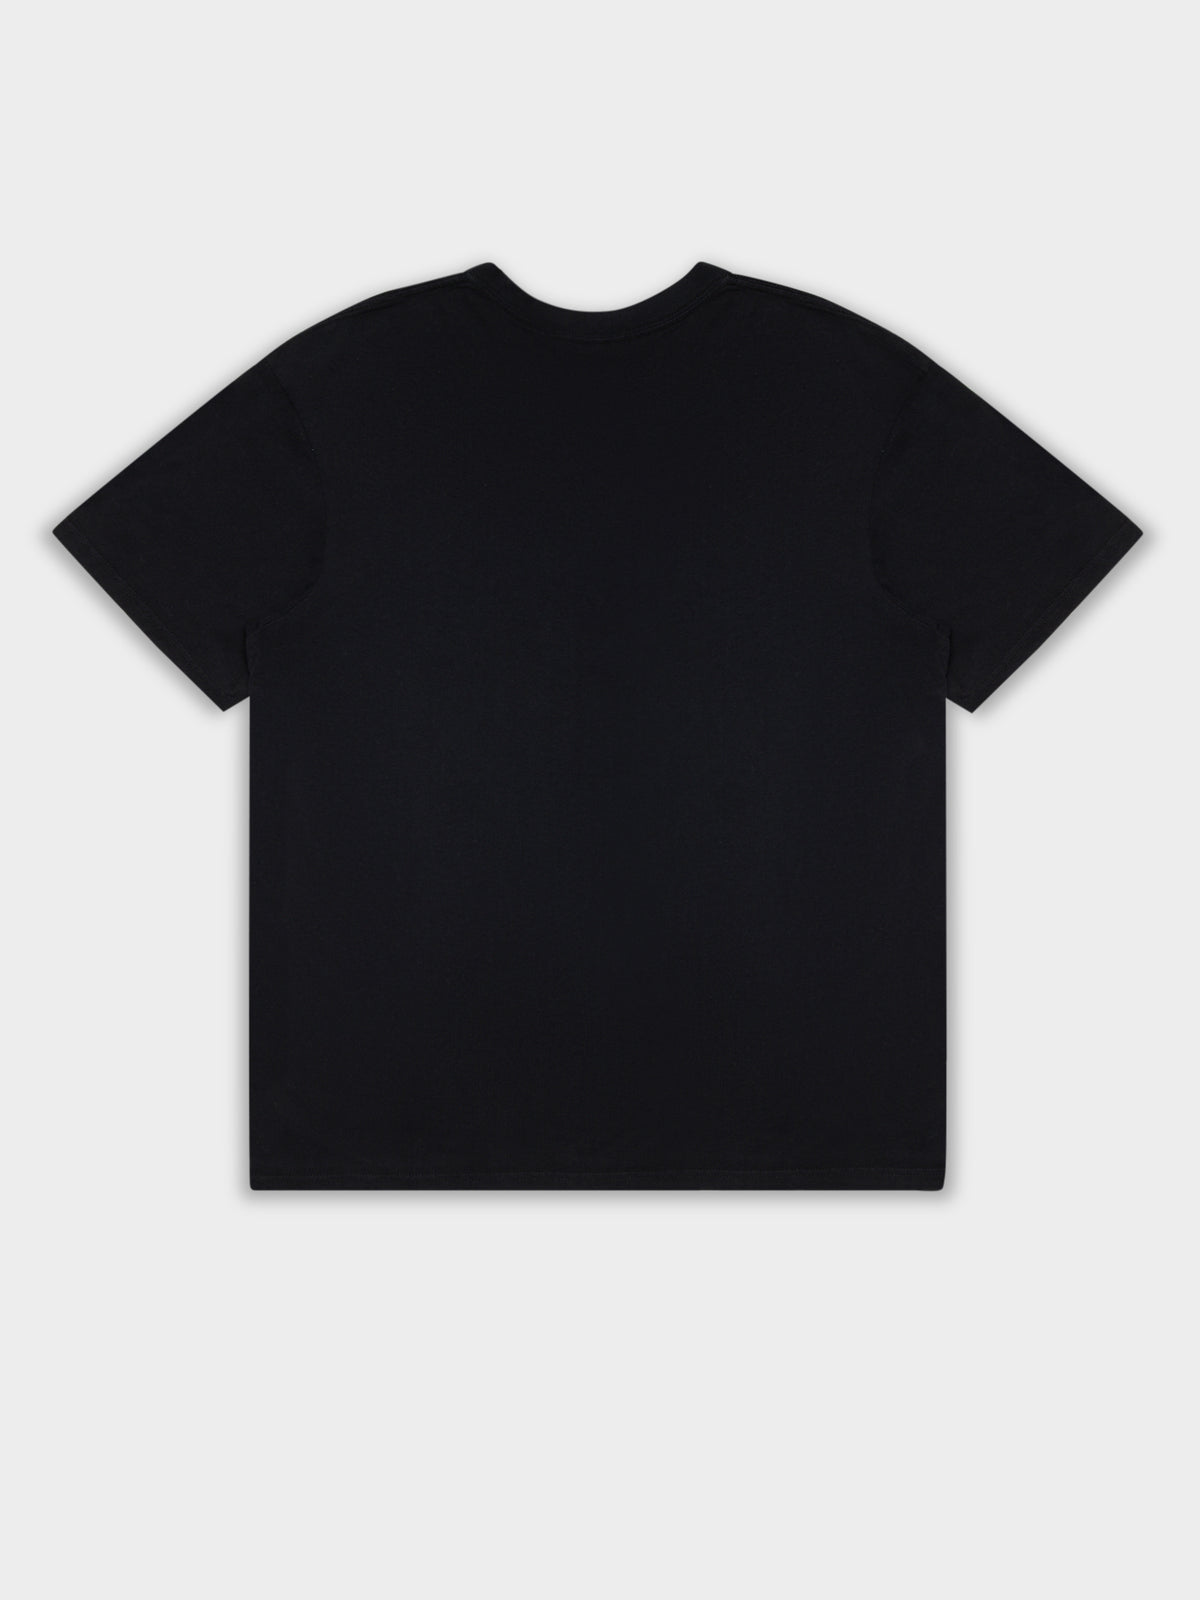 Florida Vintage Team Football T-Shirt in Vintage Black